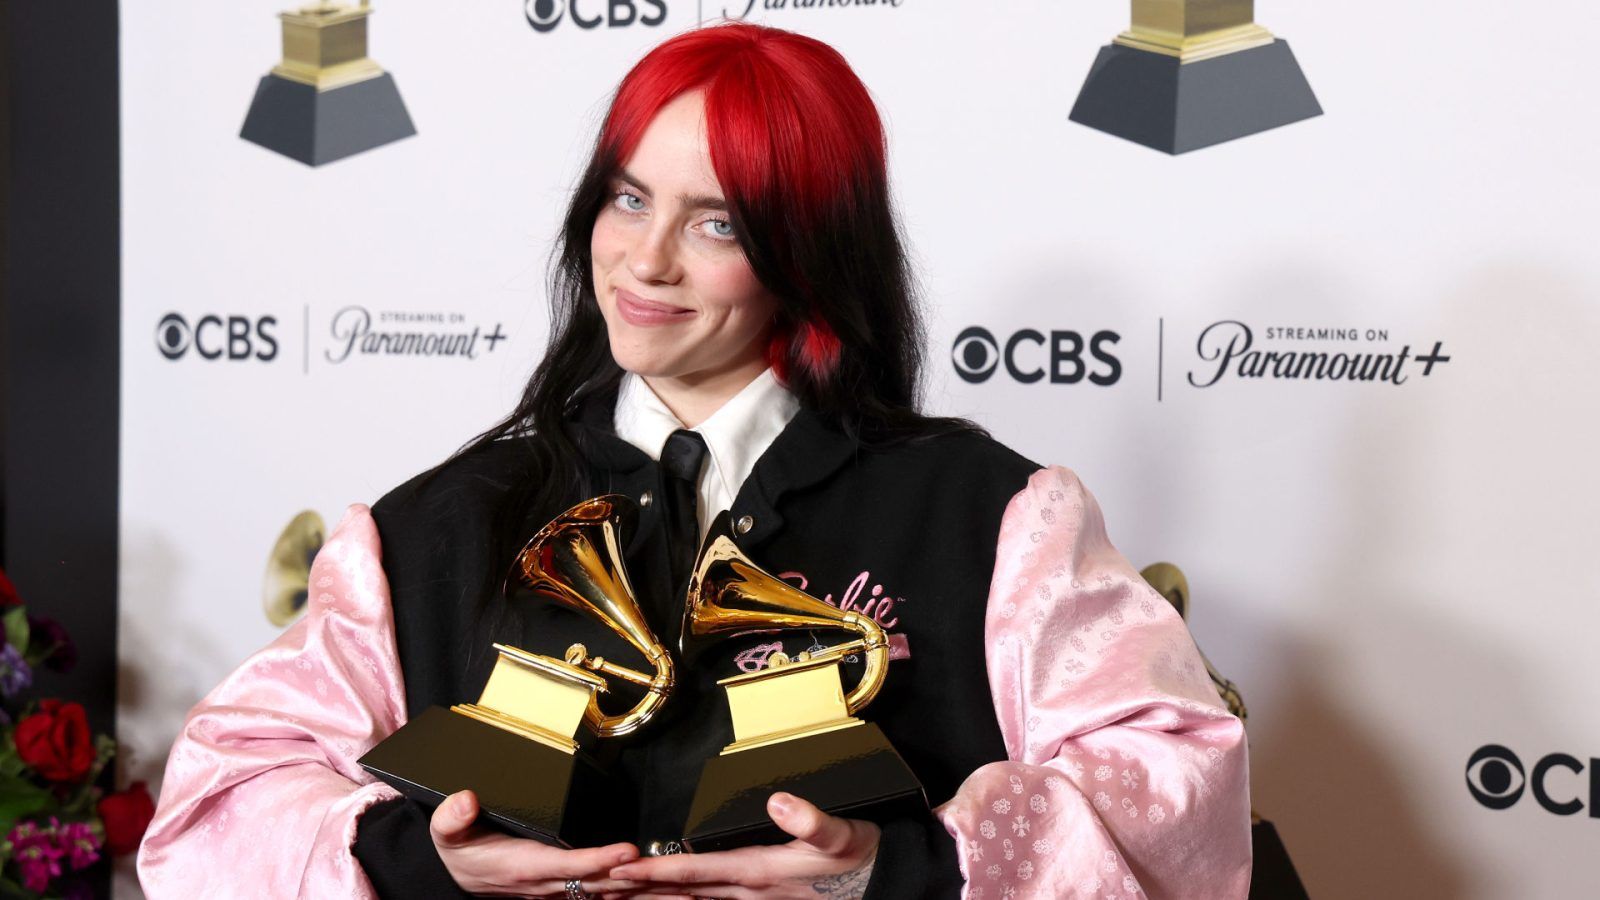 A look at youngest twotime Oscar winner, Billie Eilish's net worth